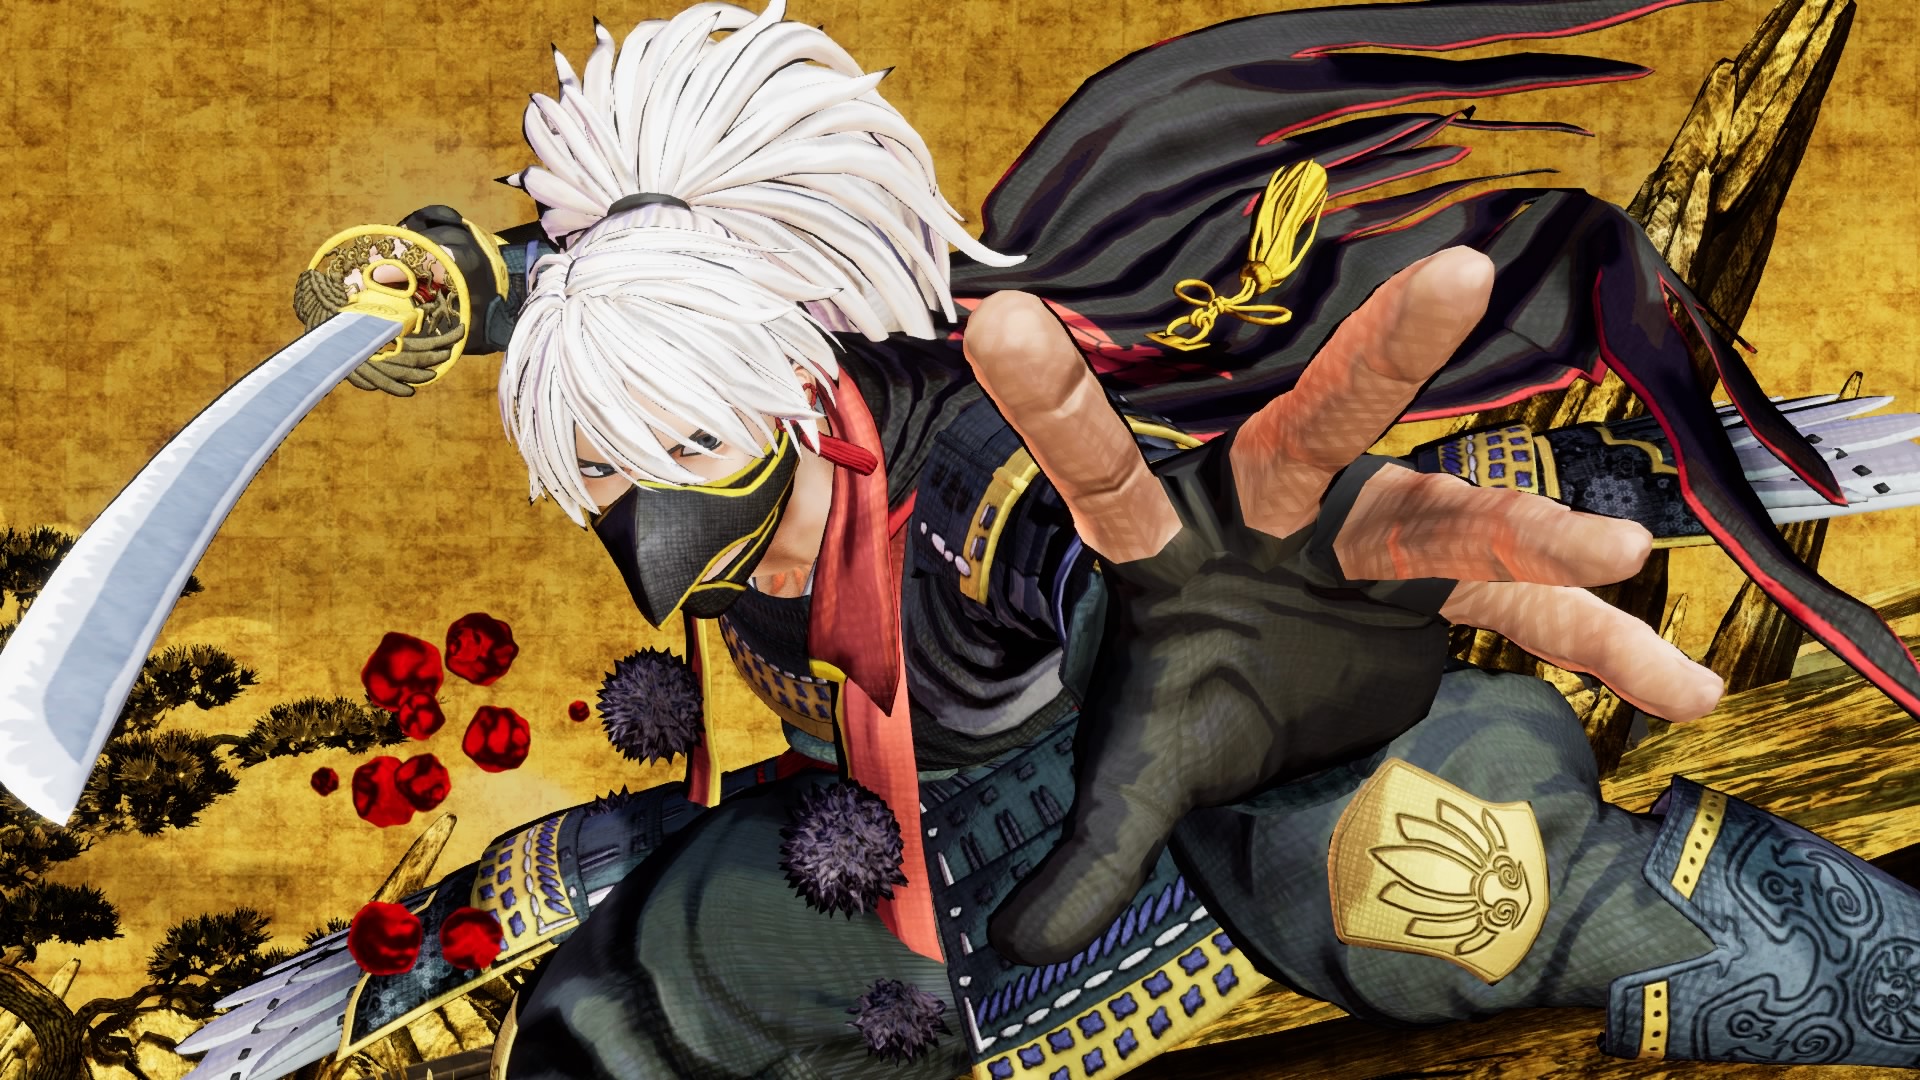 Samurai Shodown เตรียมเปิดให้ทดลองเล่นเดโมบน PS4 และ Xbox One 31 พ.ค.นี้ ในญี่ปุ่น